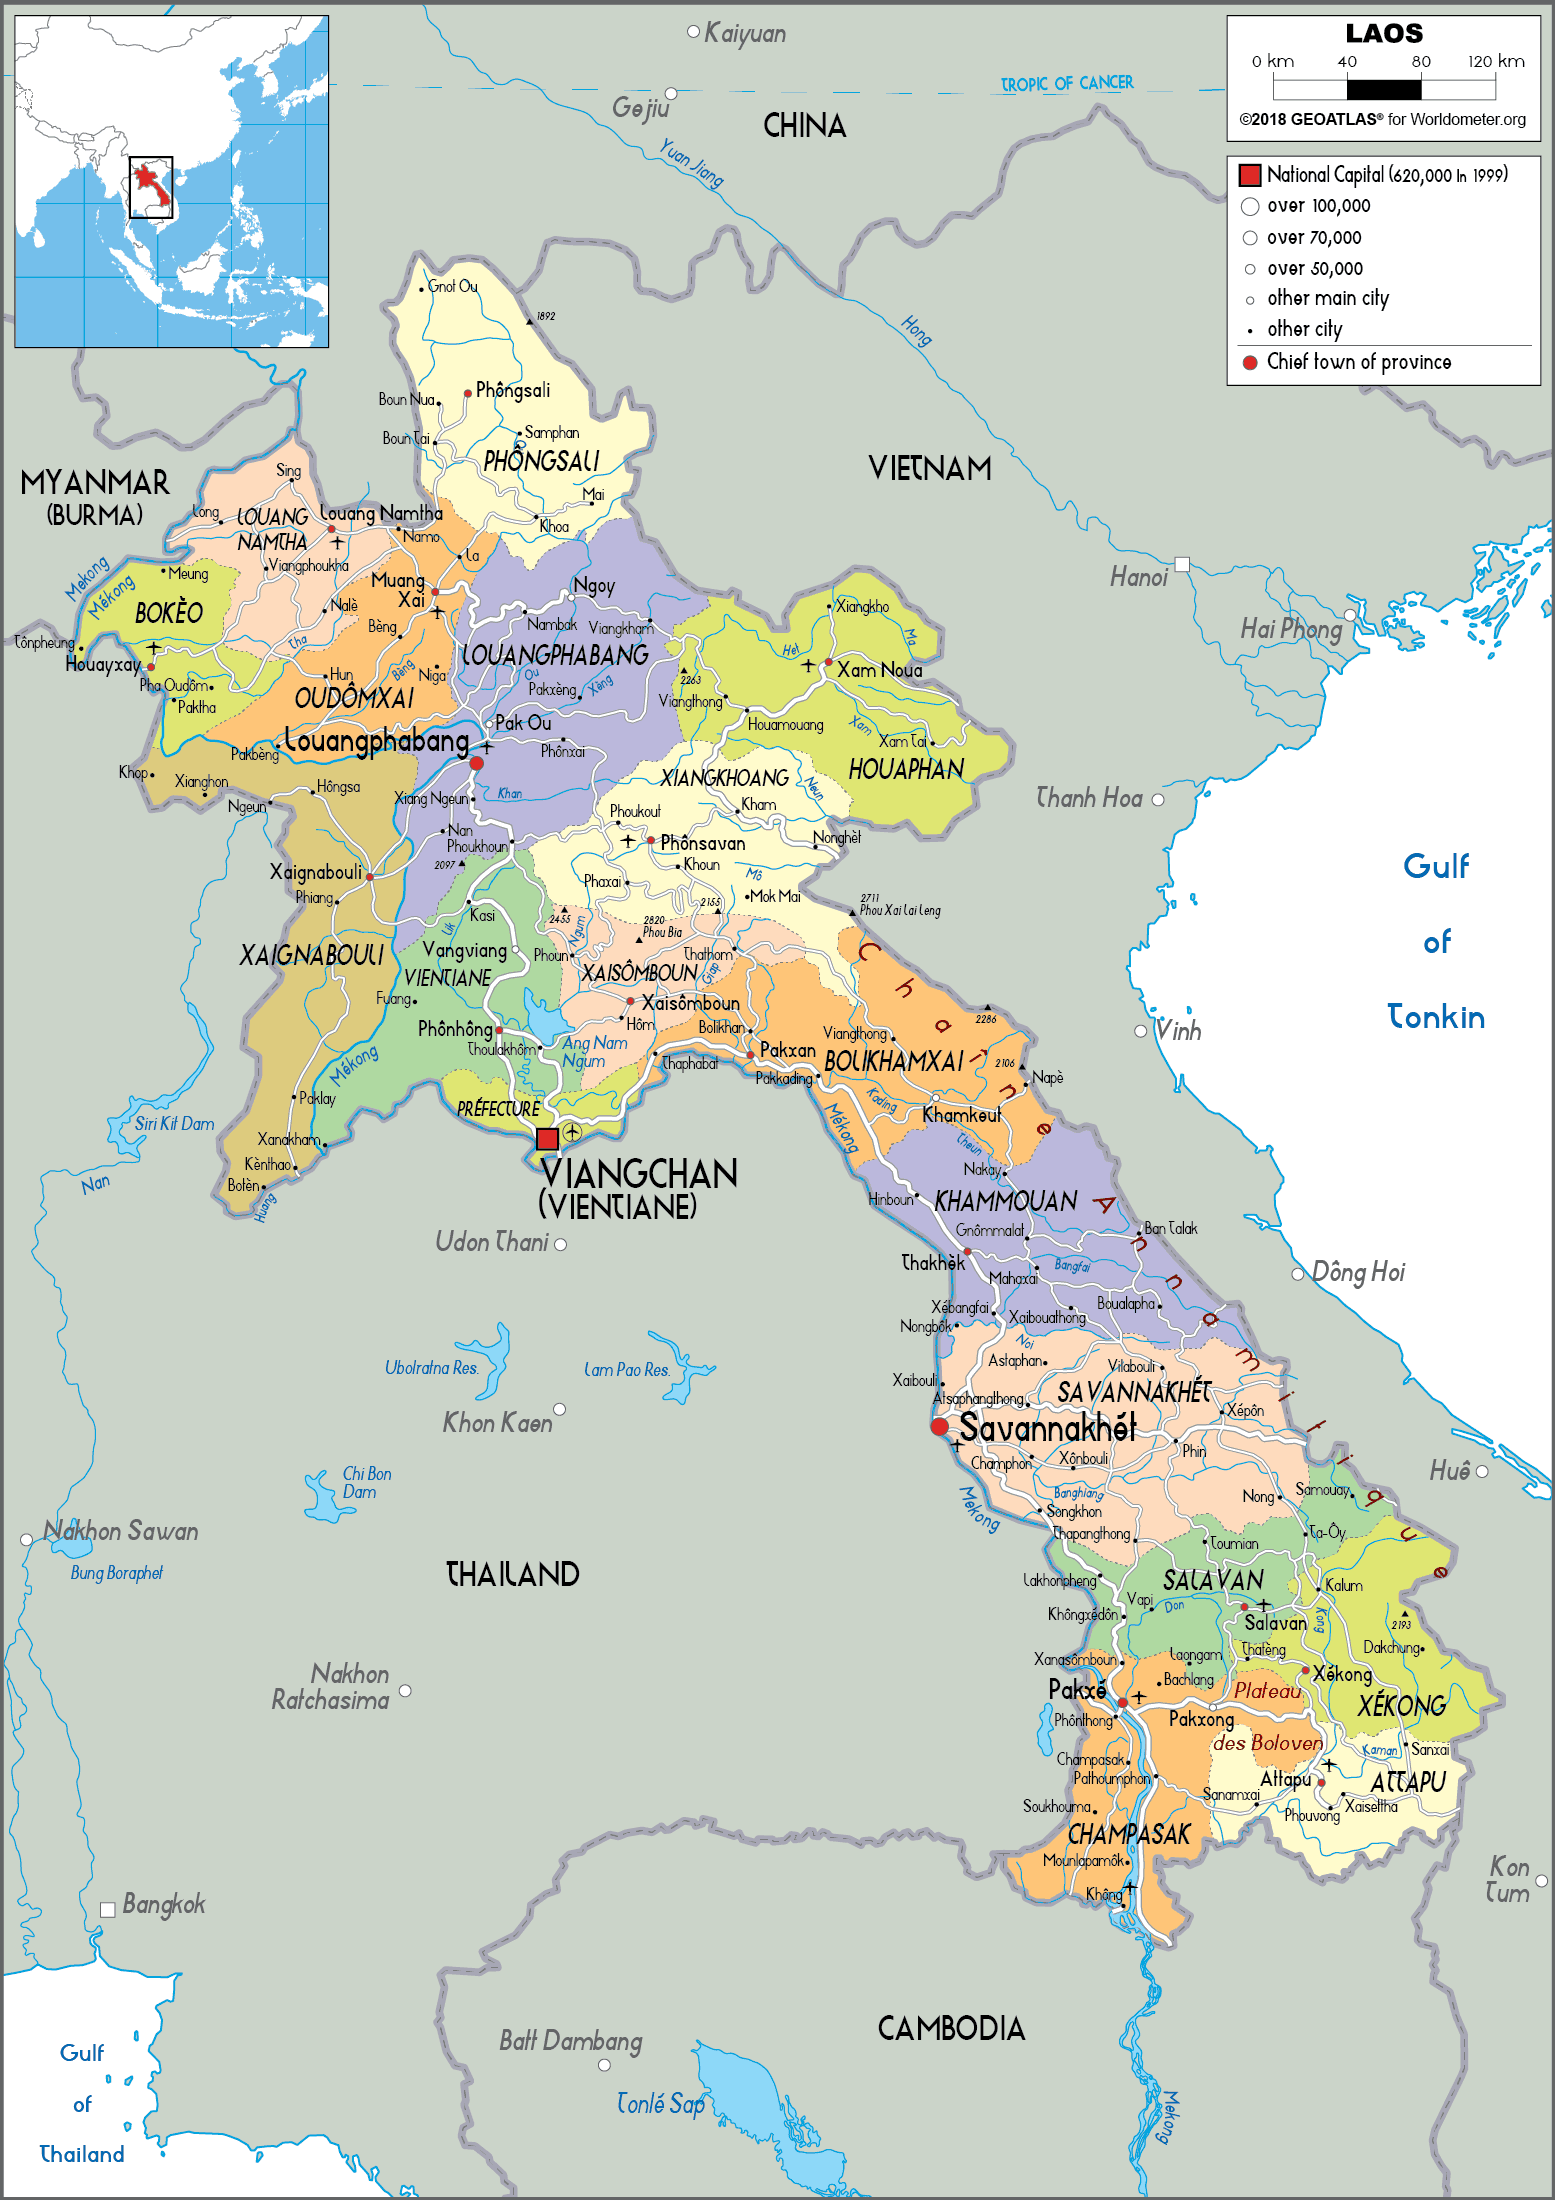 Laos Political Map 